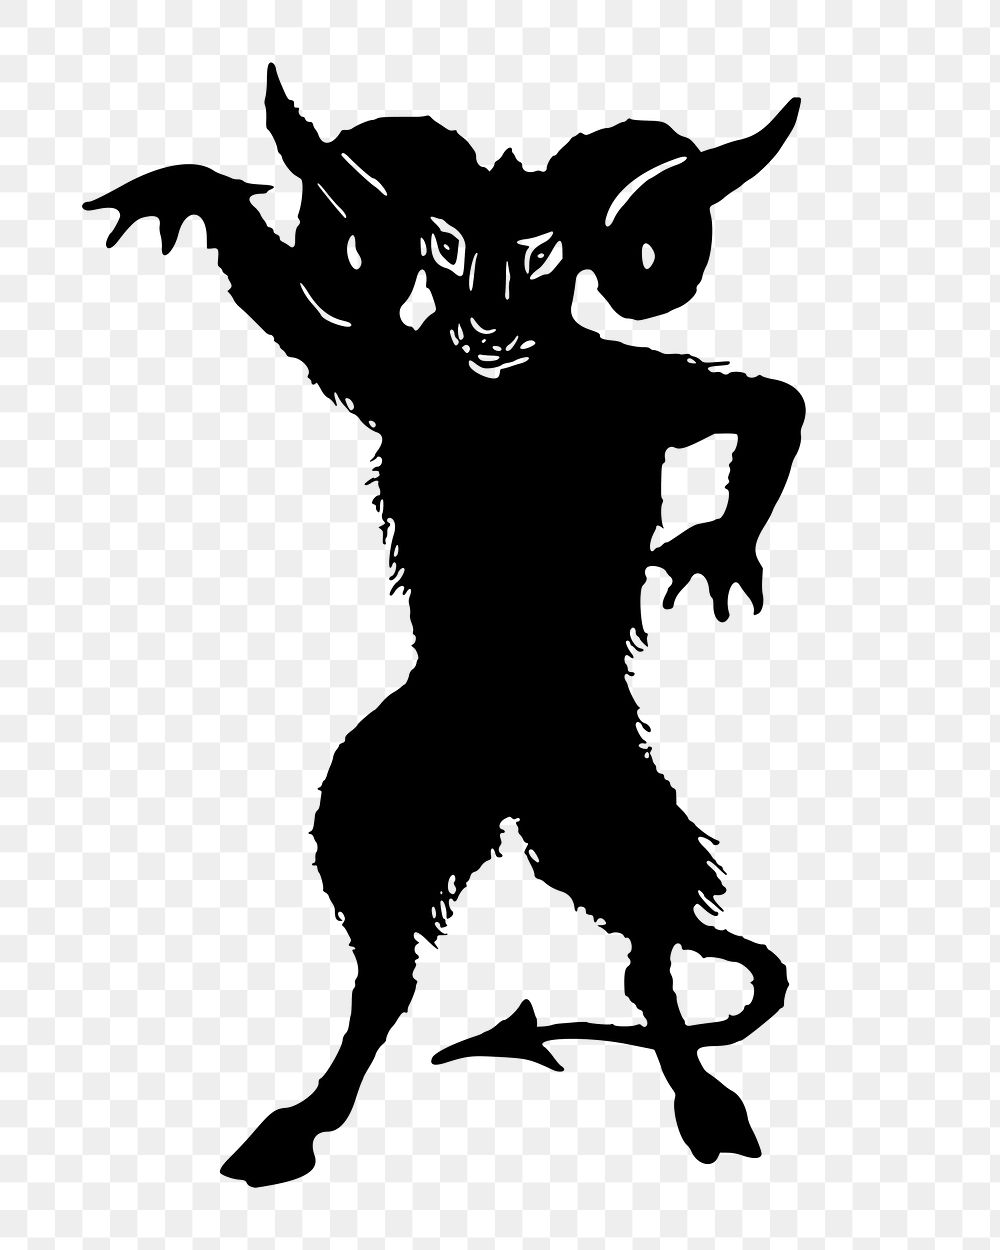 The Devil png silhouette, vintage monster illustration on transparent background. Free public domain CC0 image.